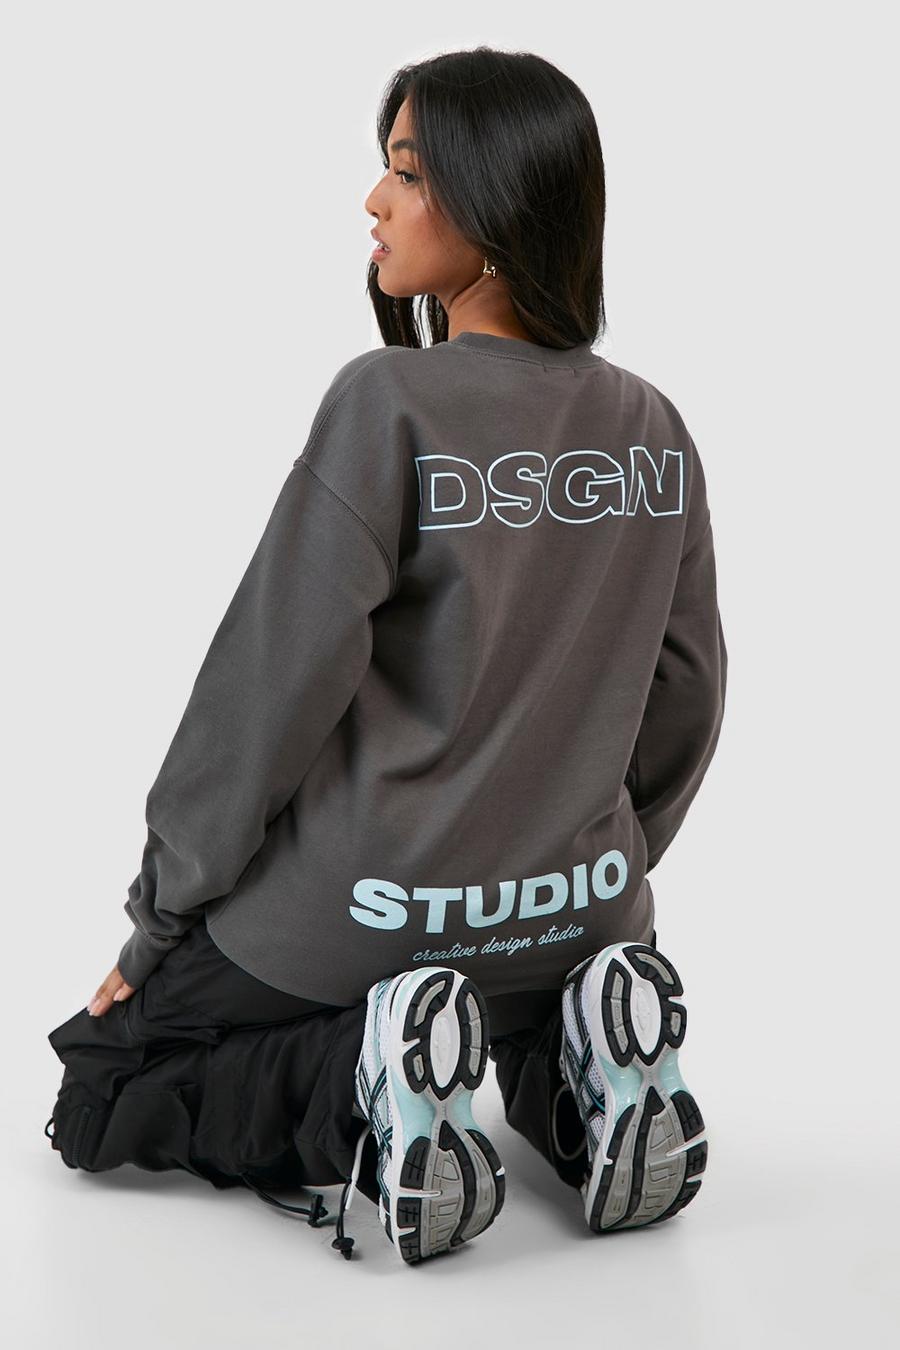 Charcoal grey Petite Dsgn Studio Back Print  Sweatshirt 